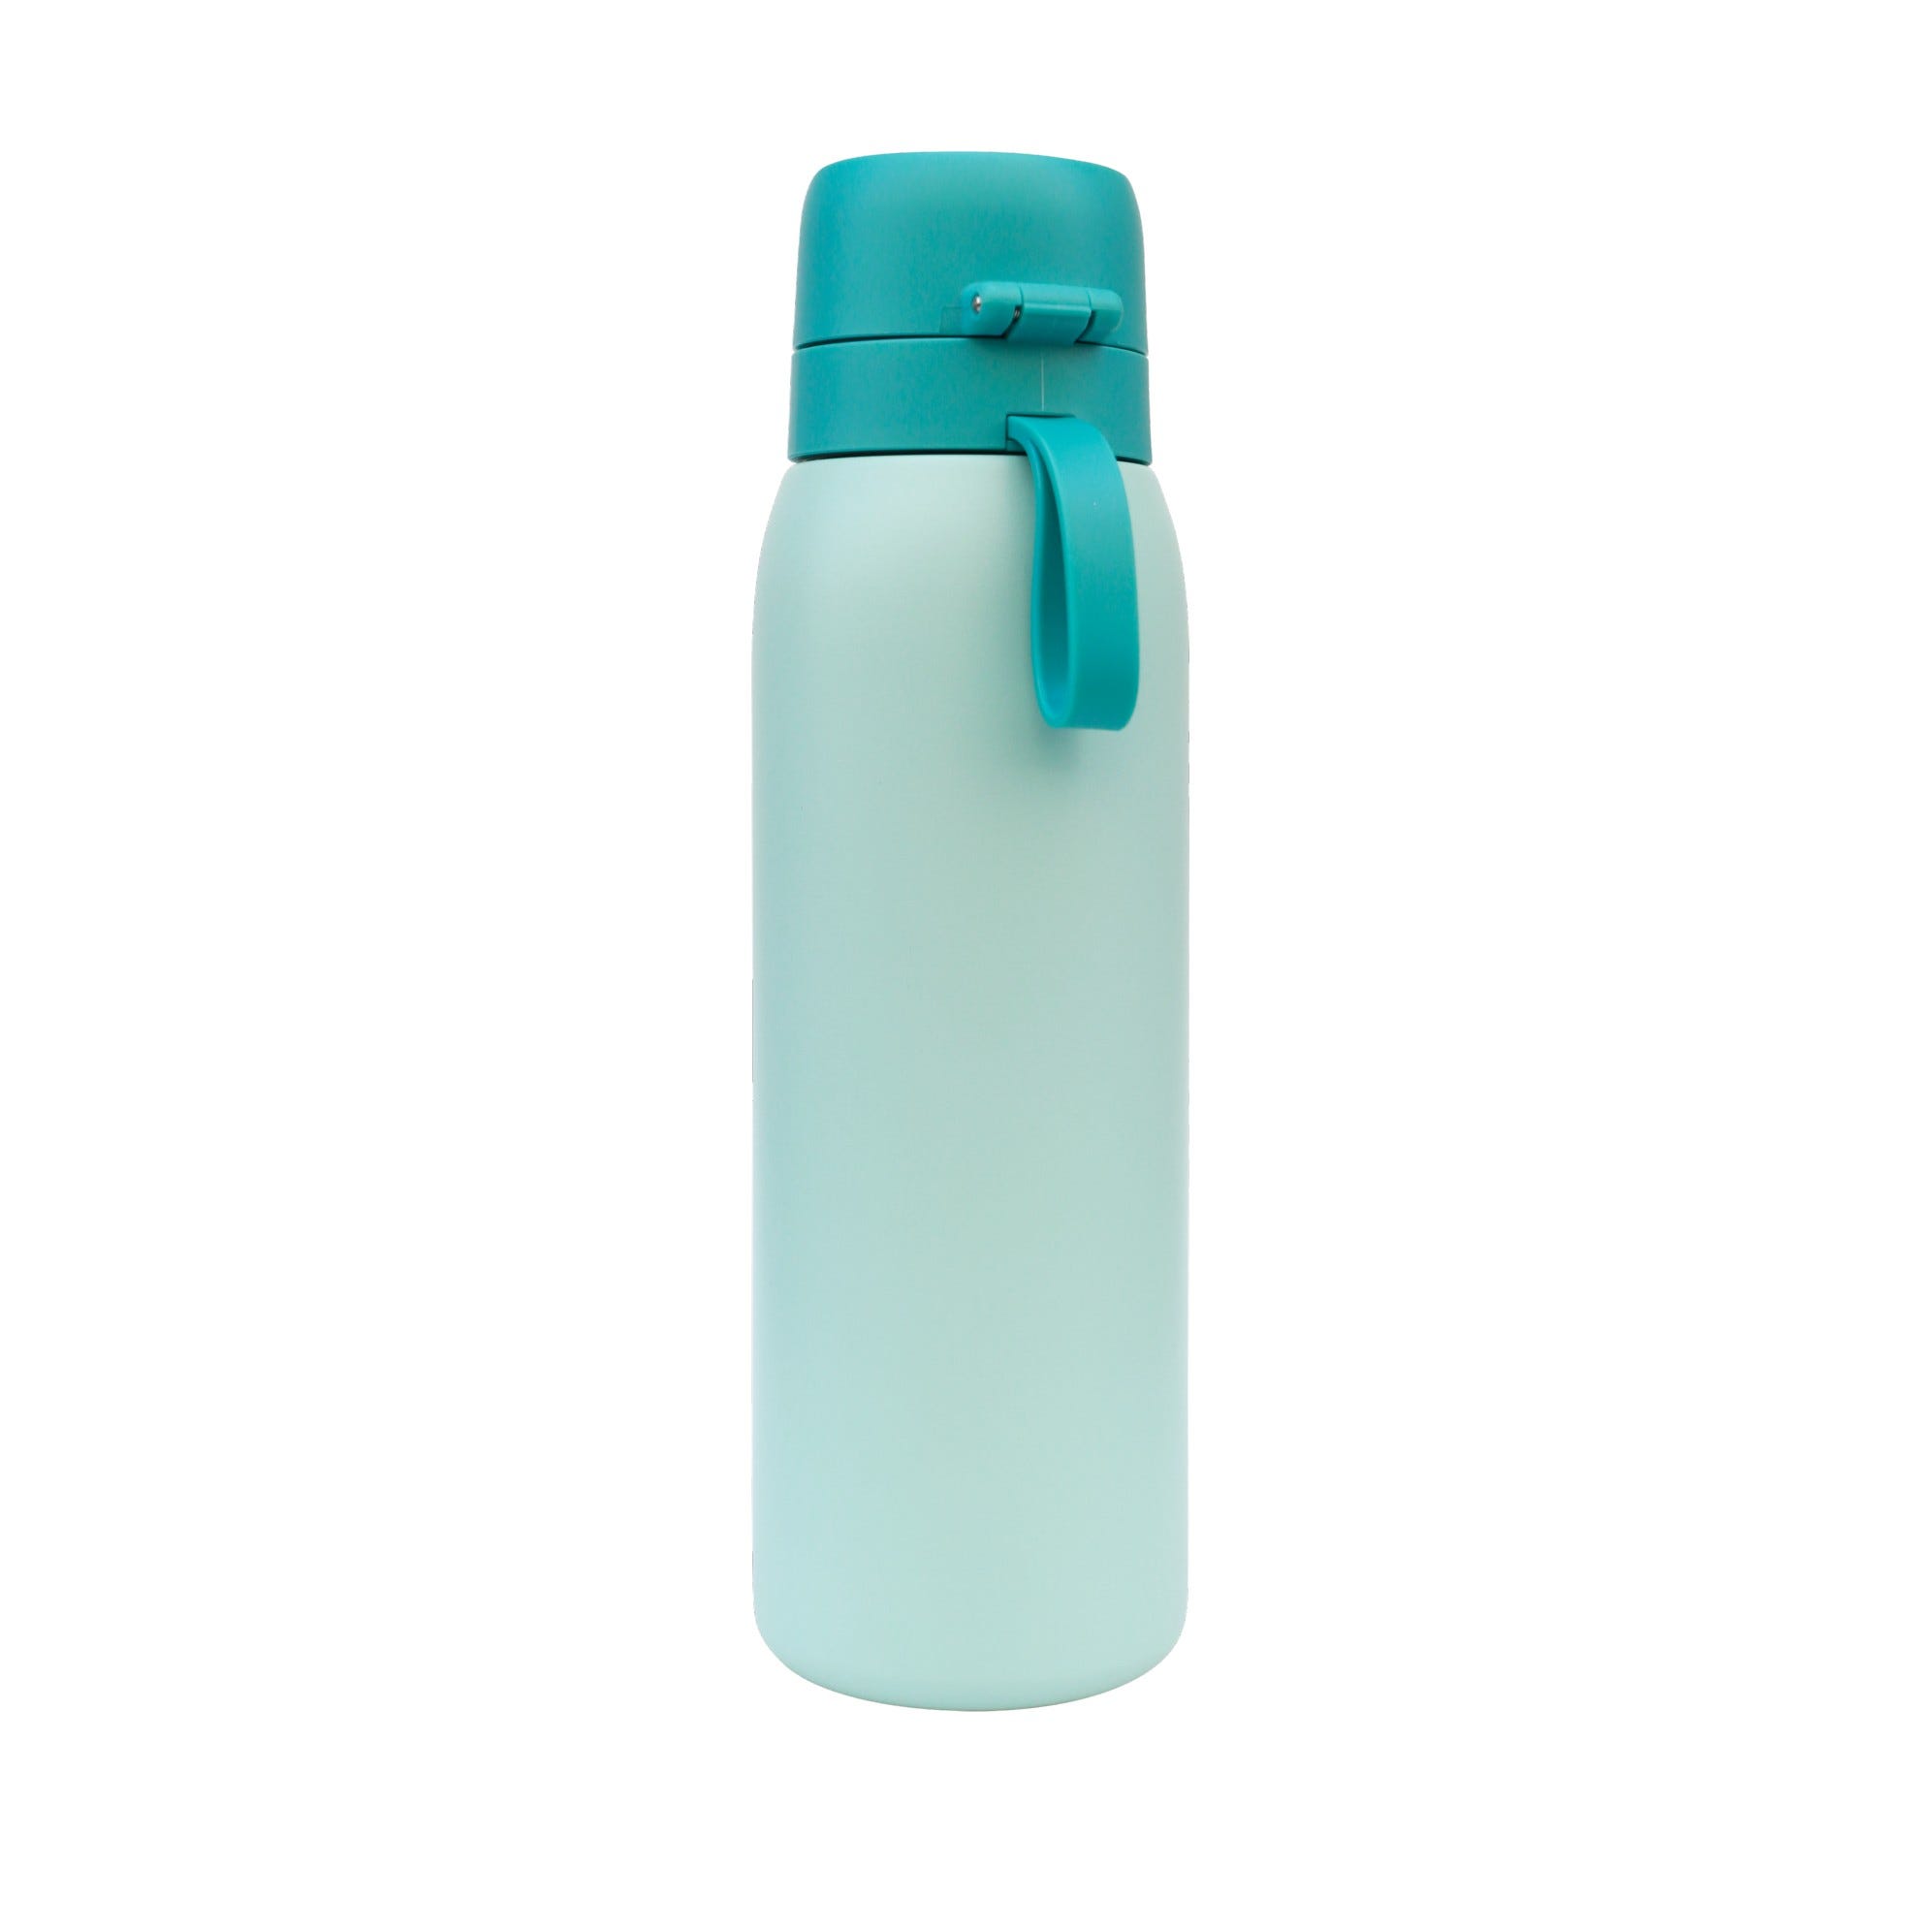 TAPP Water BottlePro I Borraccia filtrante +80 contaminanti